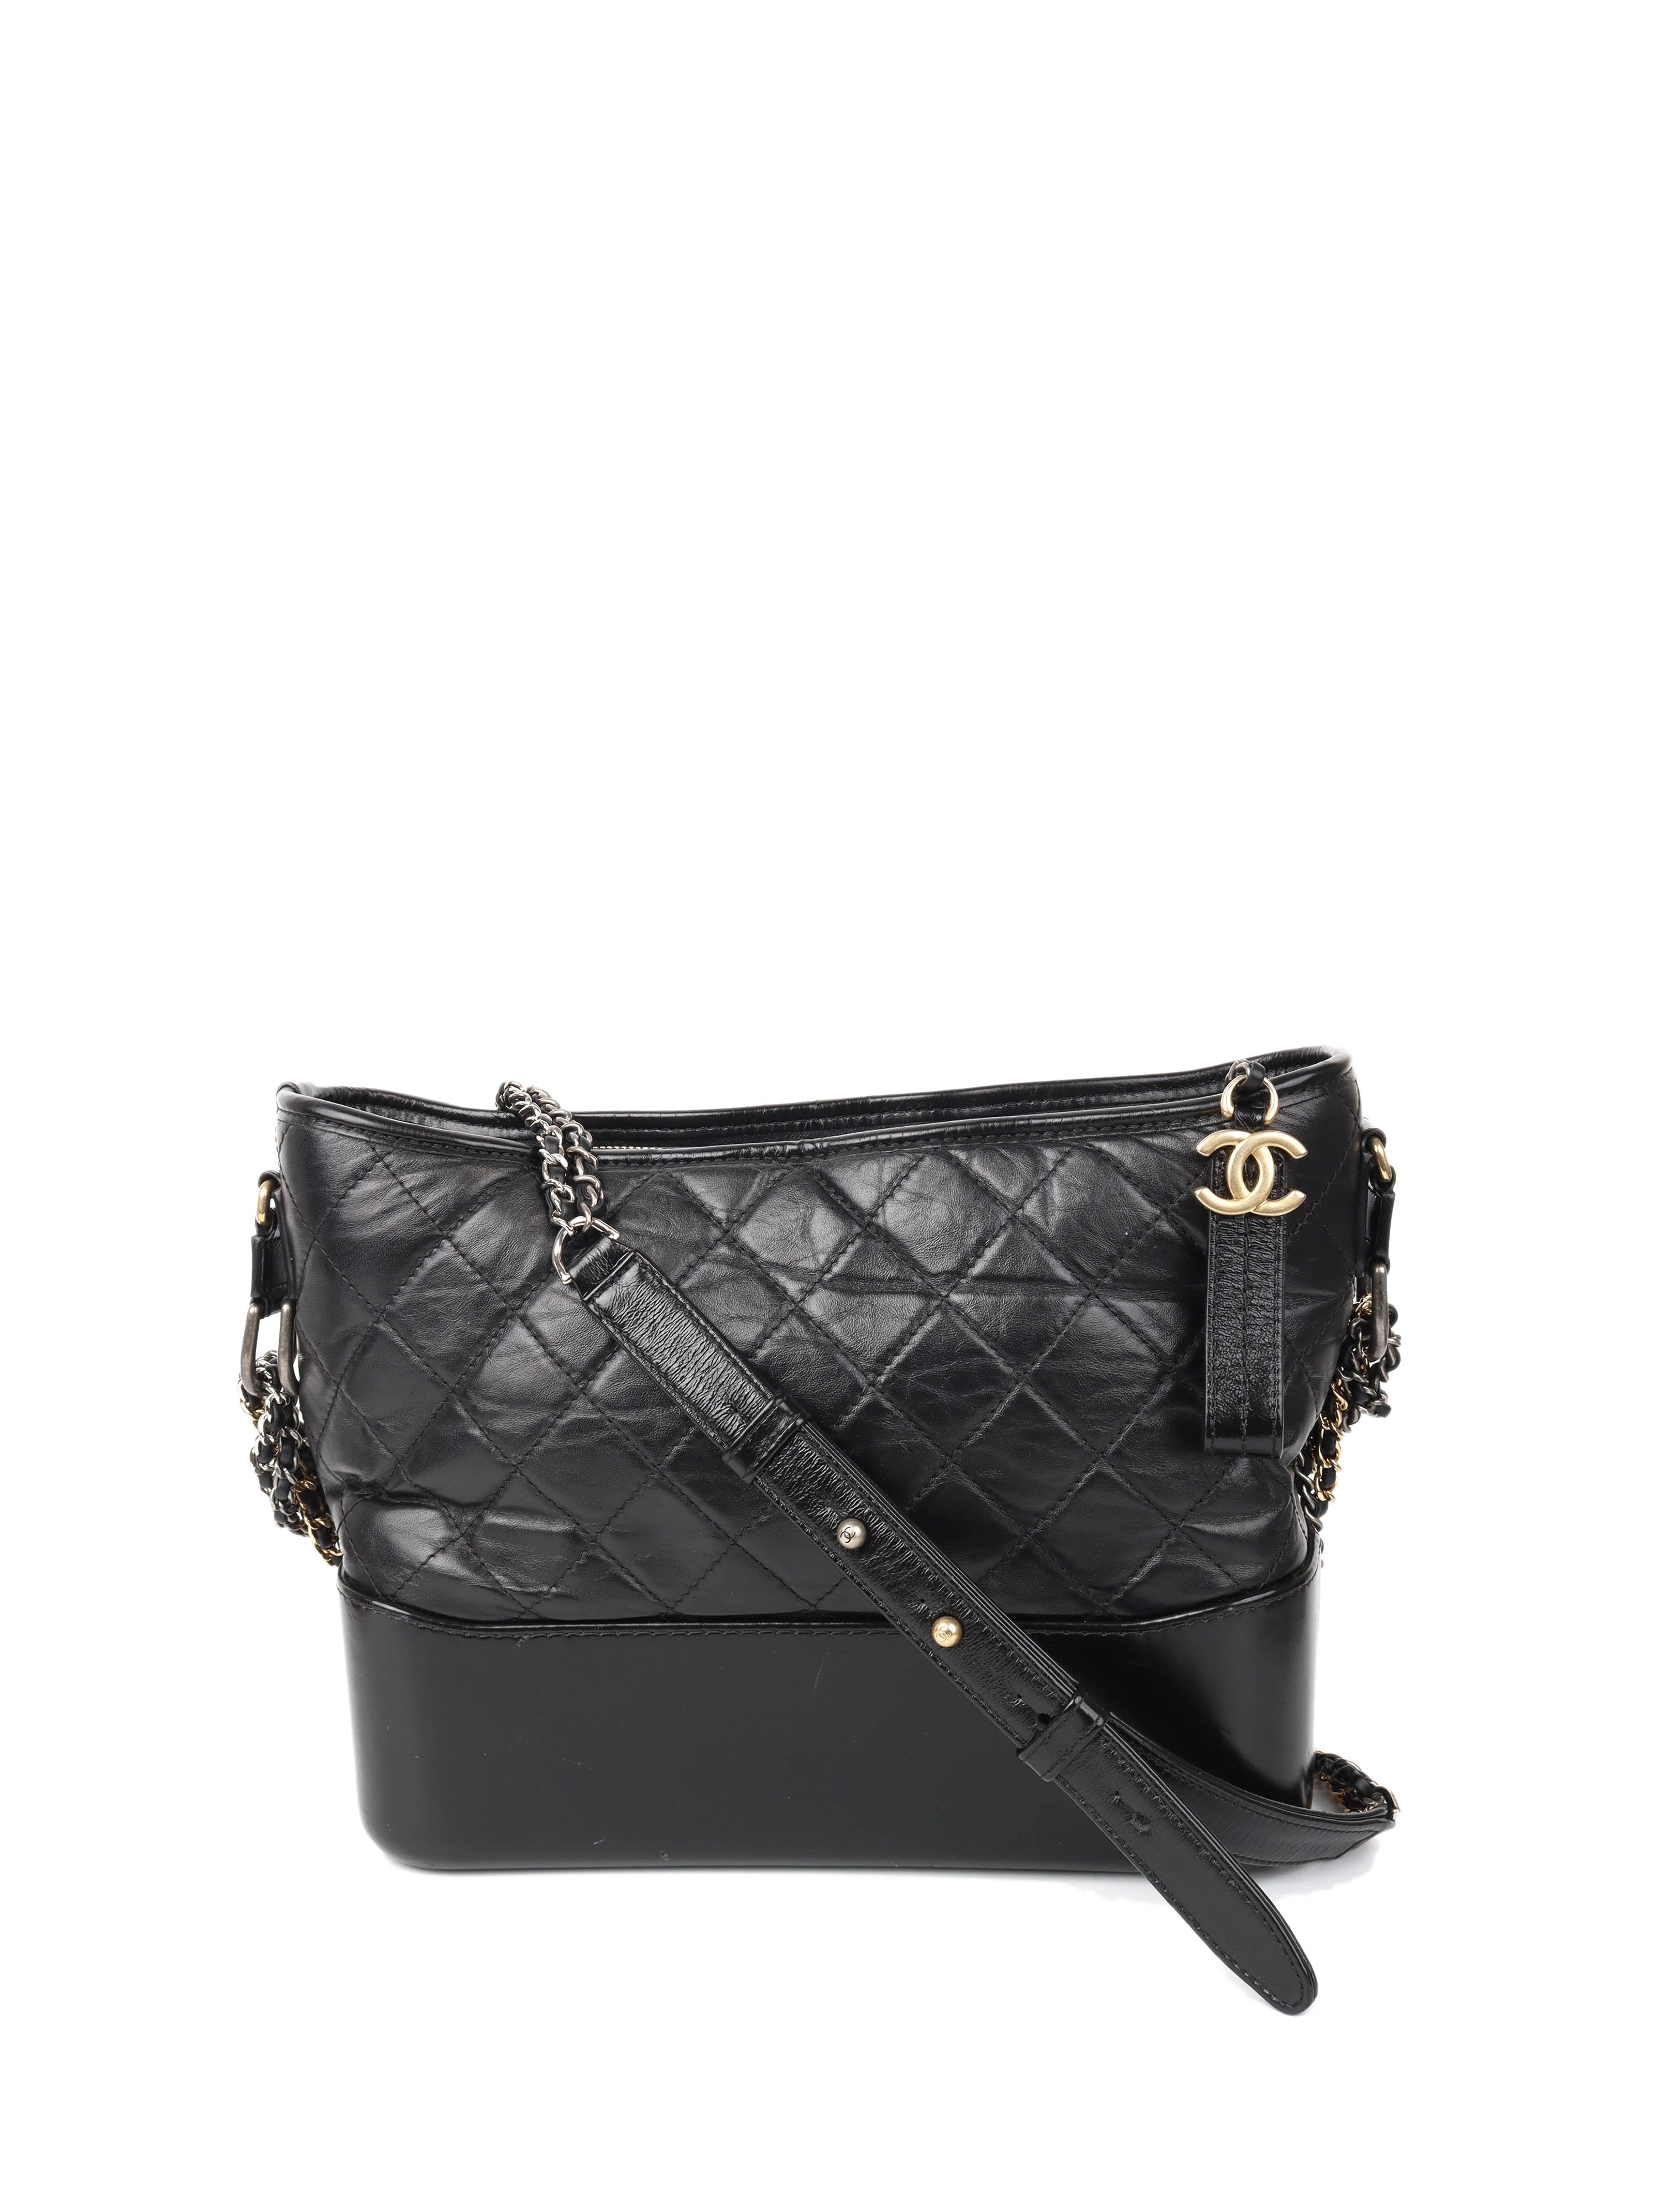 Chanel Medium Black Gabrielle Bag